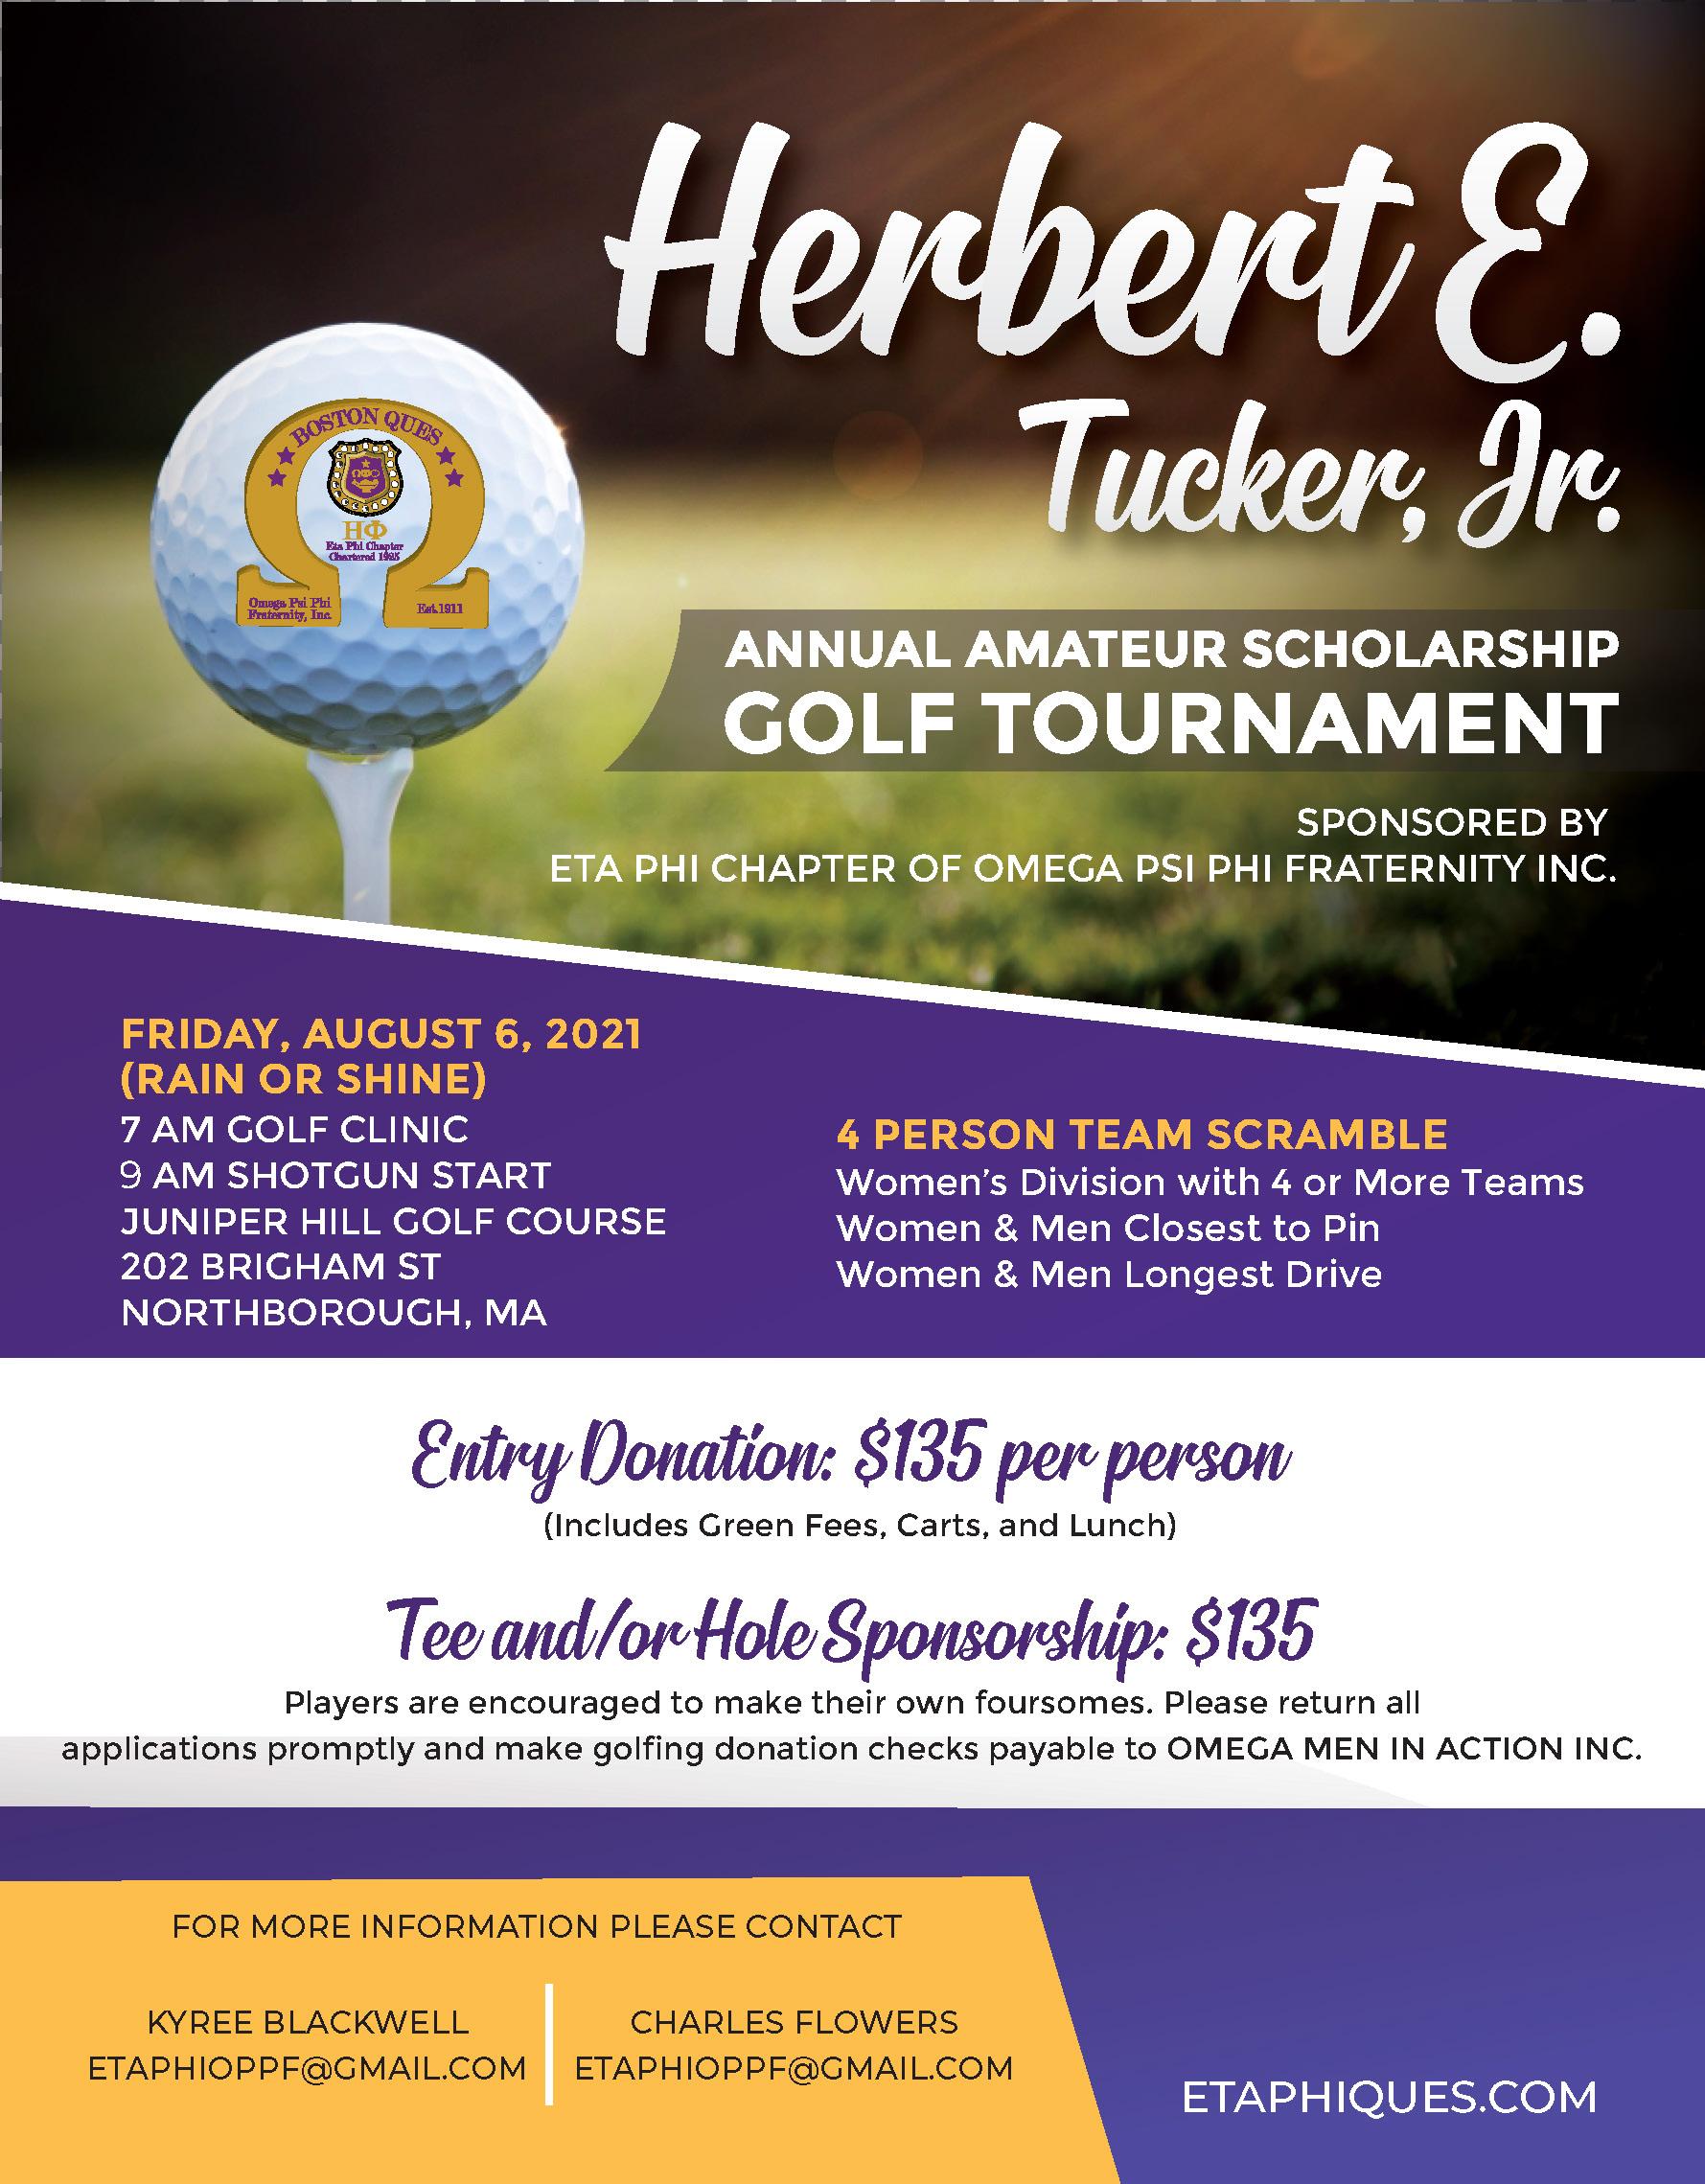 Herbert E. Tucker Jr. Annual Amateur Scholarship Golf Tournament ...